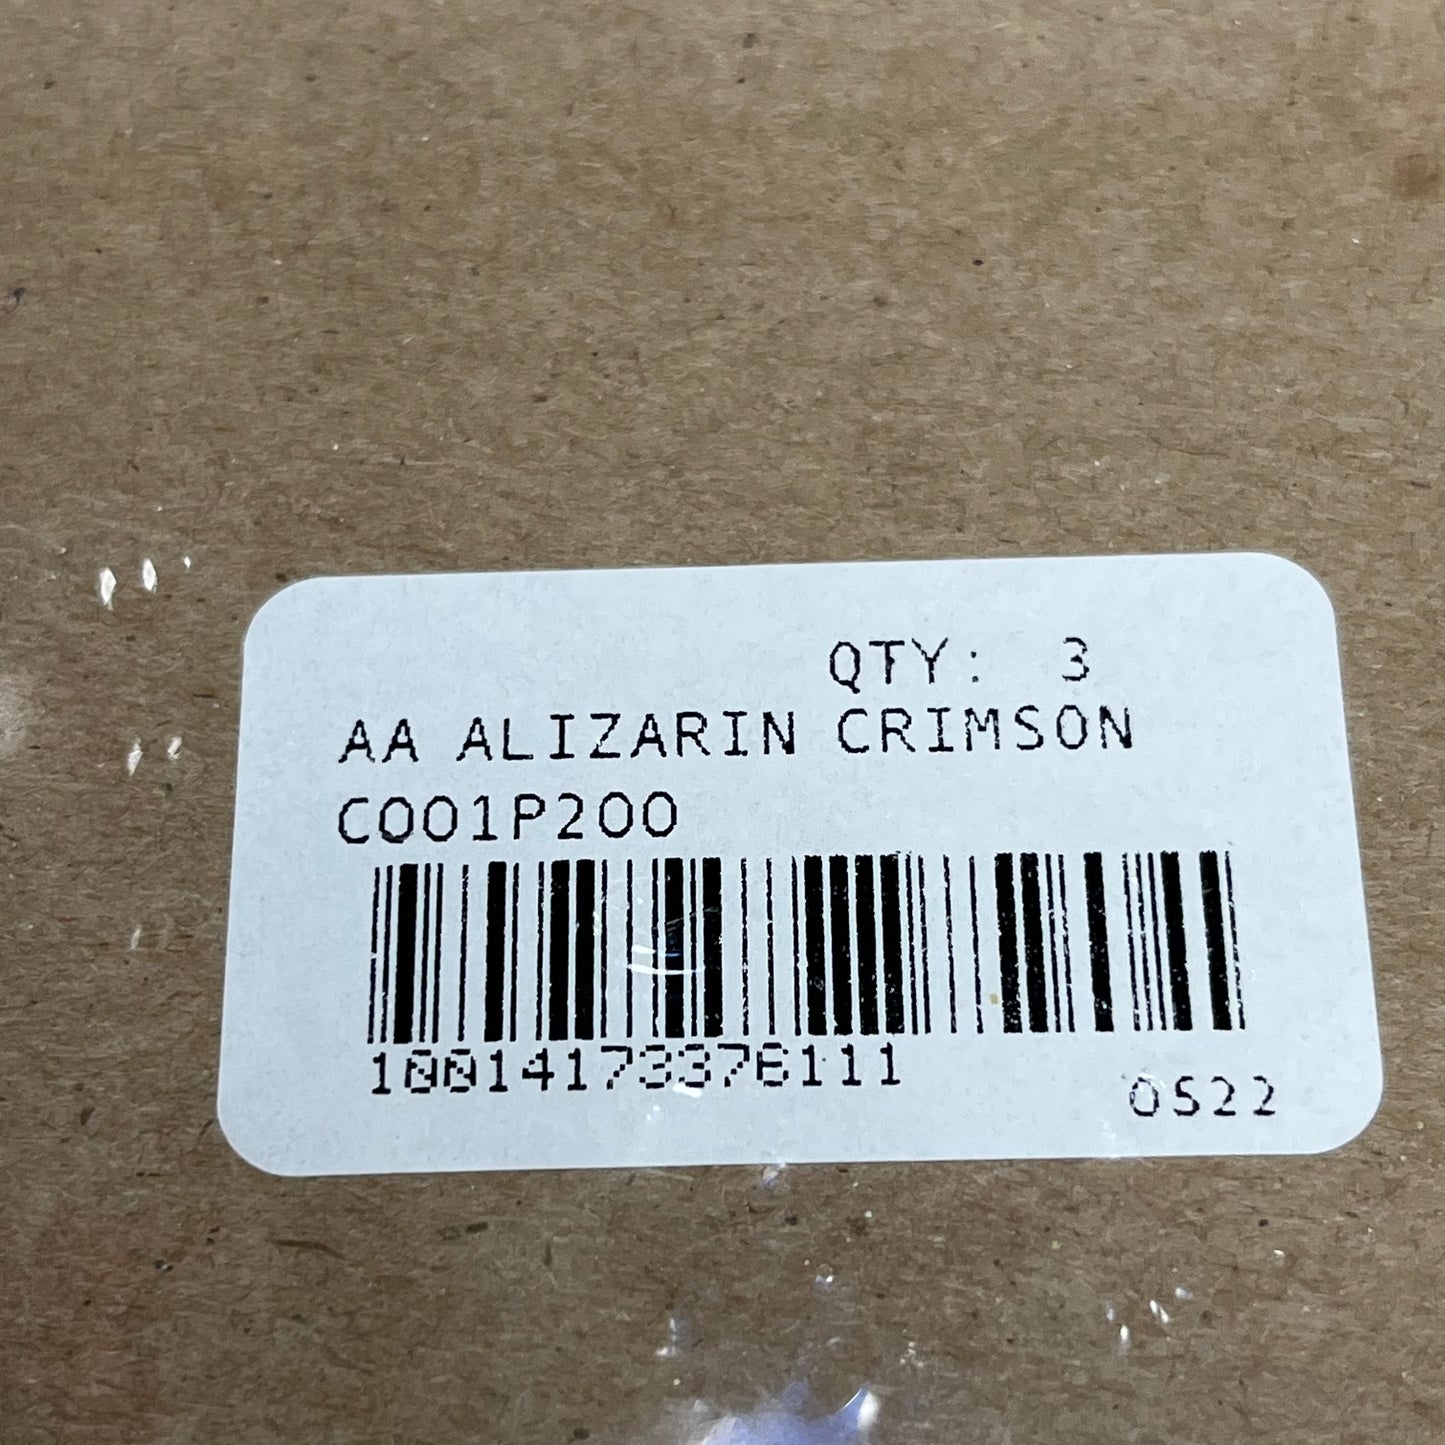 GRUMBACHER 3-PACK! Academy Acrylic Alizarin Crimson 6.76 fl oz/200 ml C001P200 (New)